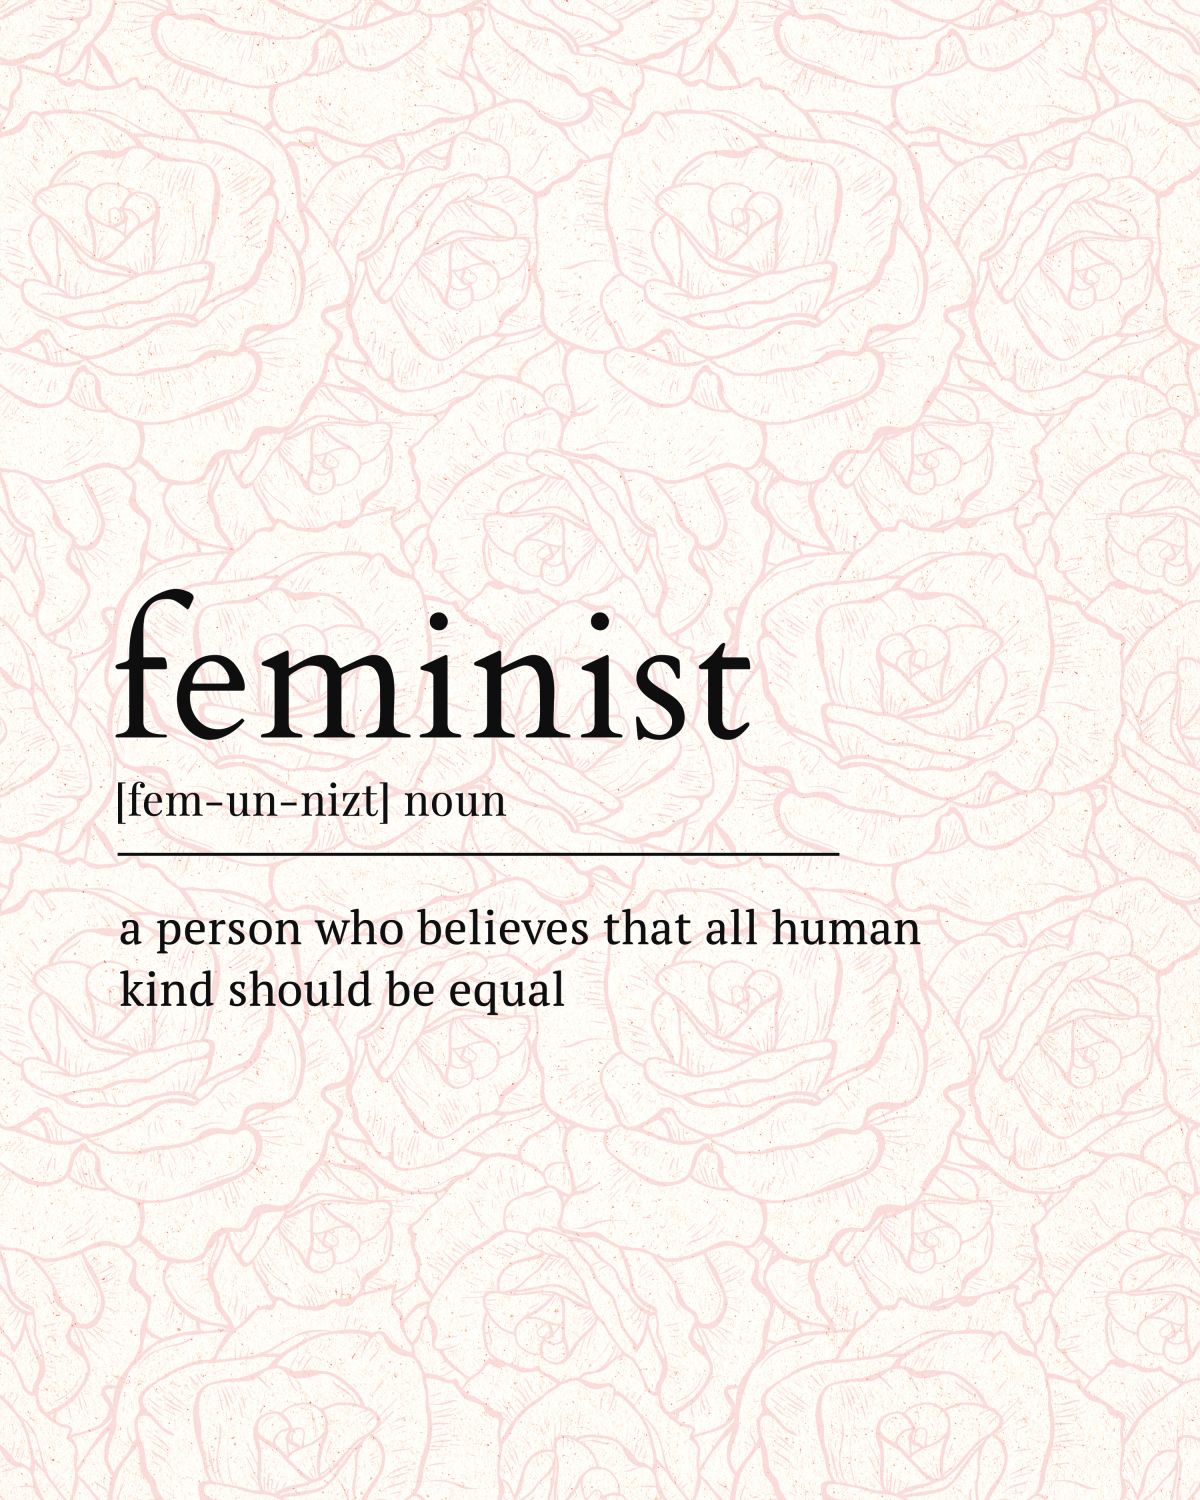 Feminist Definition